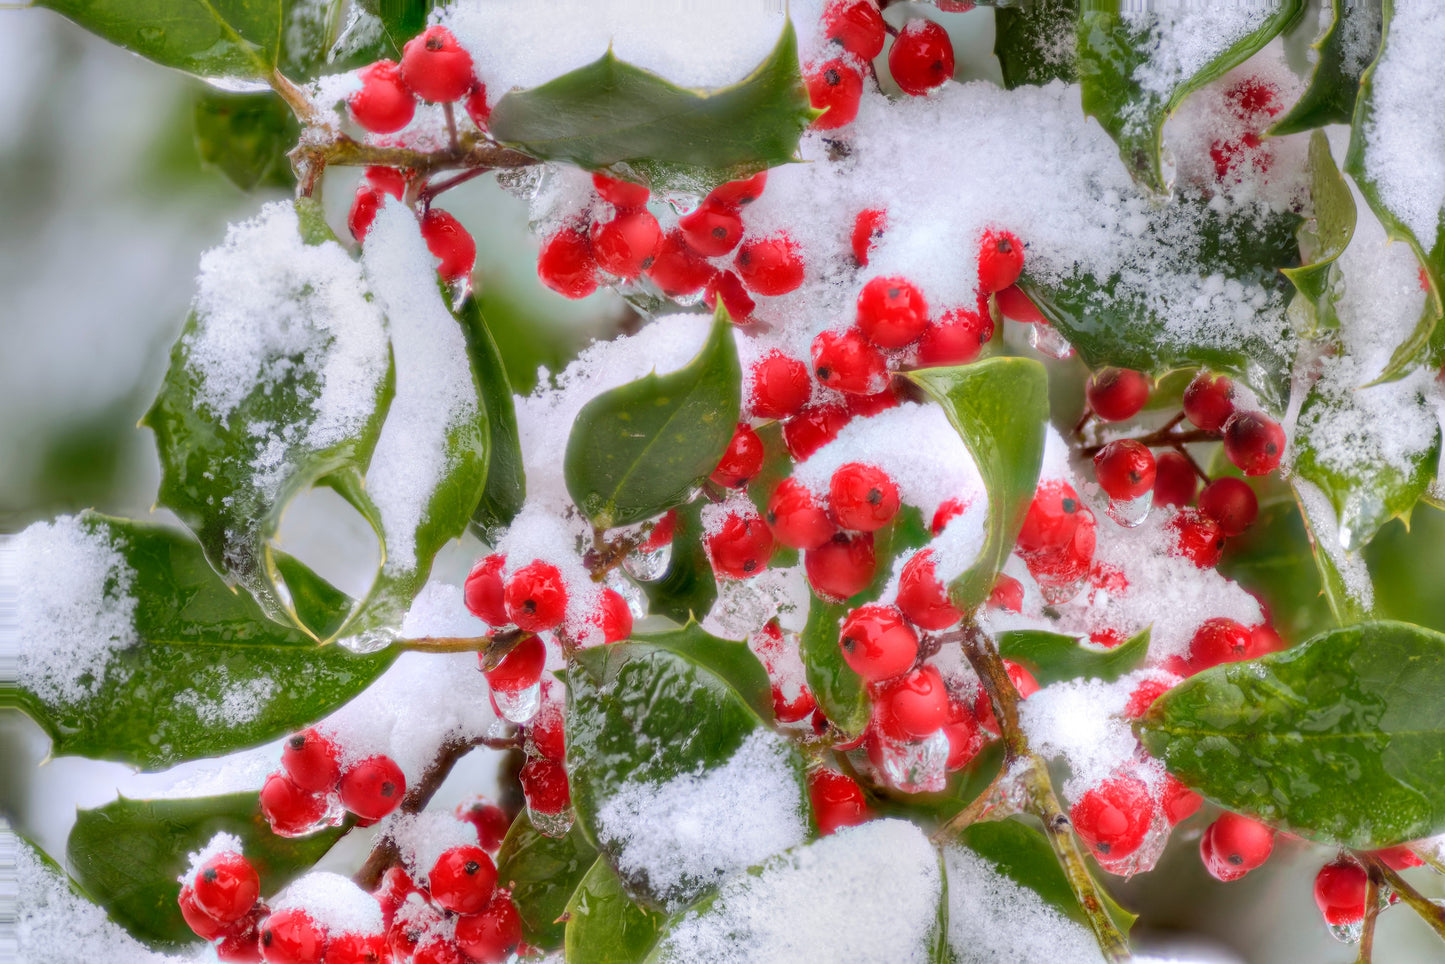 40 AMERICAN HOLLY Ilex Opaca Tree Shrub Evergreen Red Berry Seeds - aka White Holly, Prickly Holly, Christmas Holly, Yule Holly